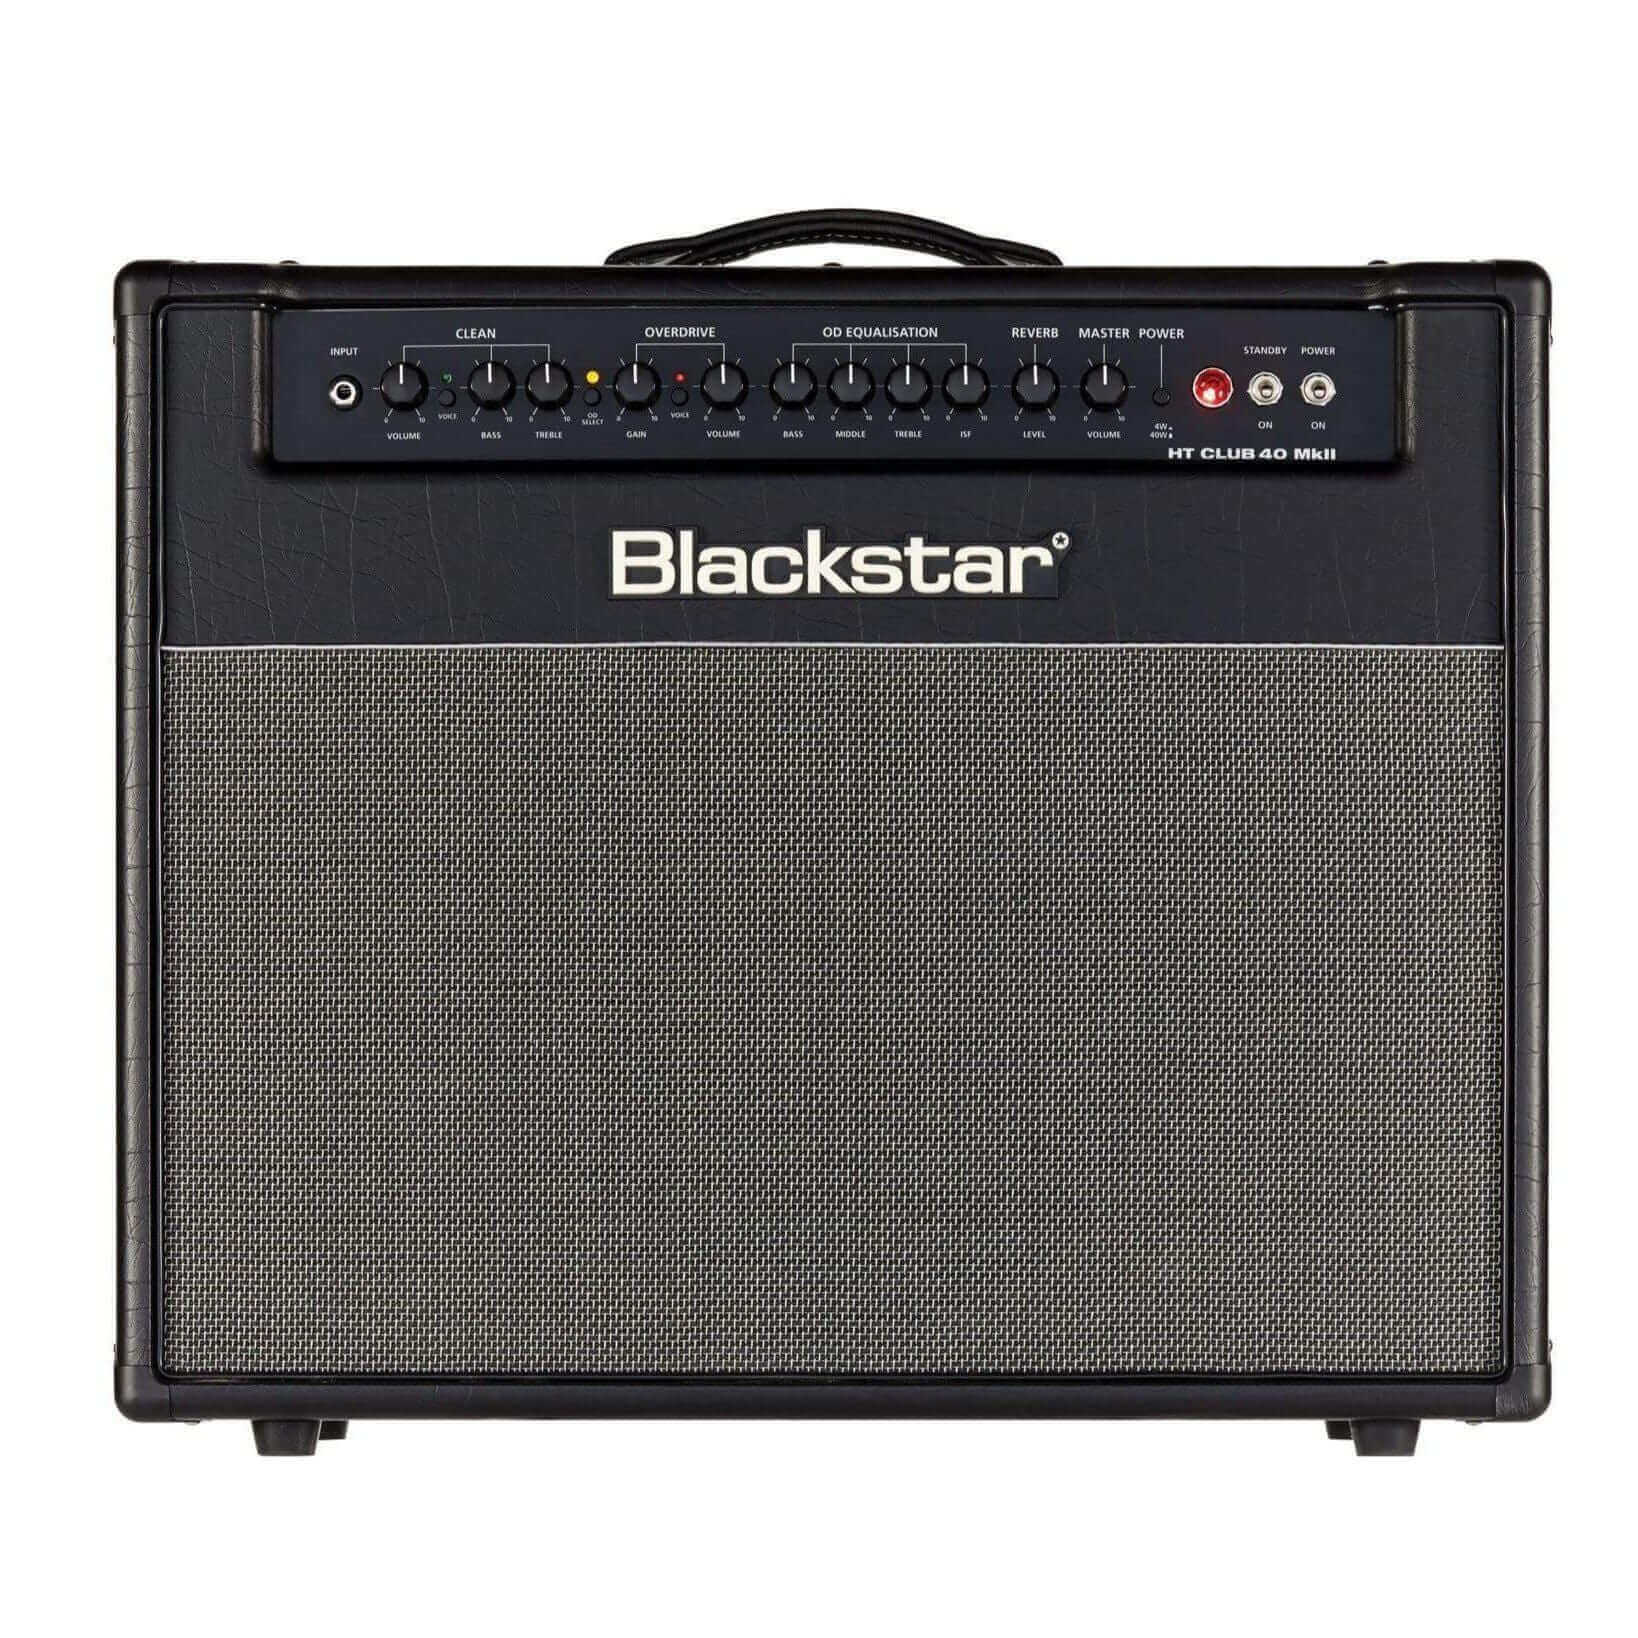 Blackstar Electric Guitar Blackstar HT Club 40 MKII